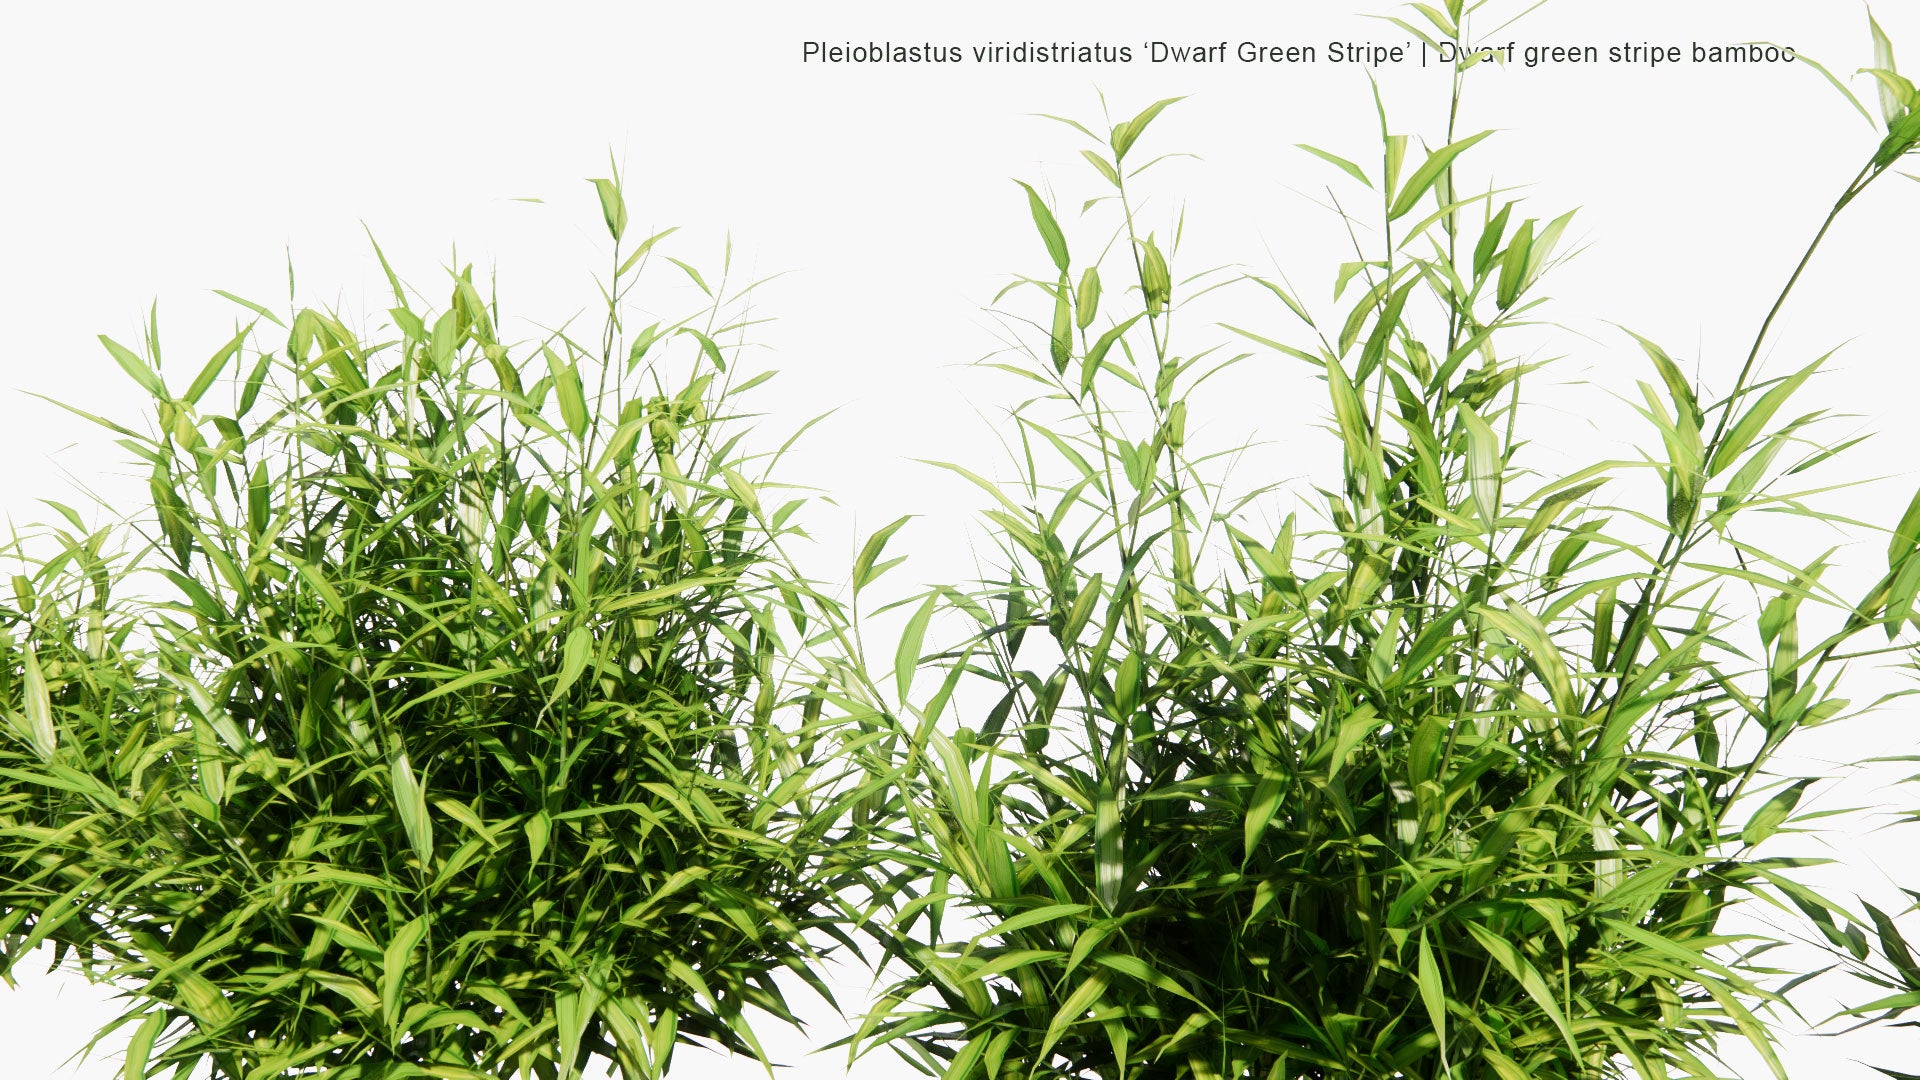 Low Poly Pleioblastus Viridistriatus 'Dwarf Green Stripe' - Dwarf Green Stripe Bamboo (3D Model)